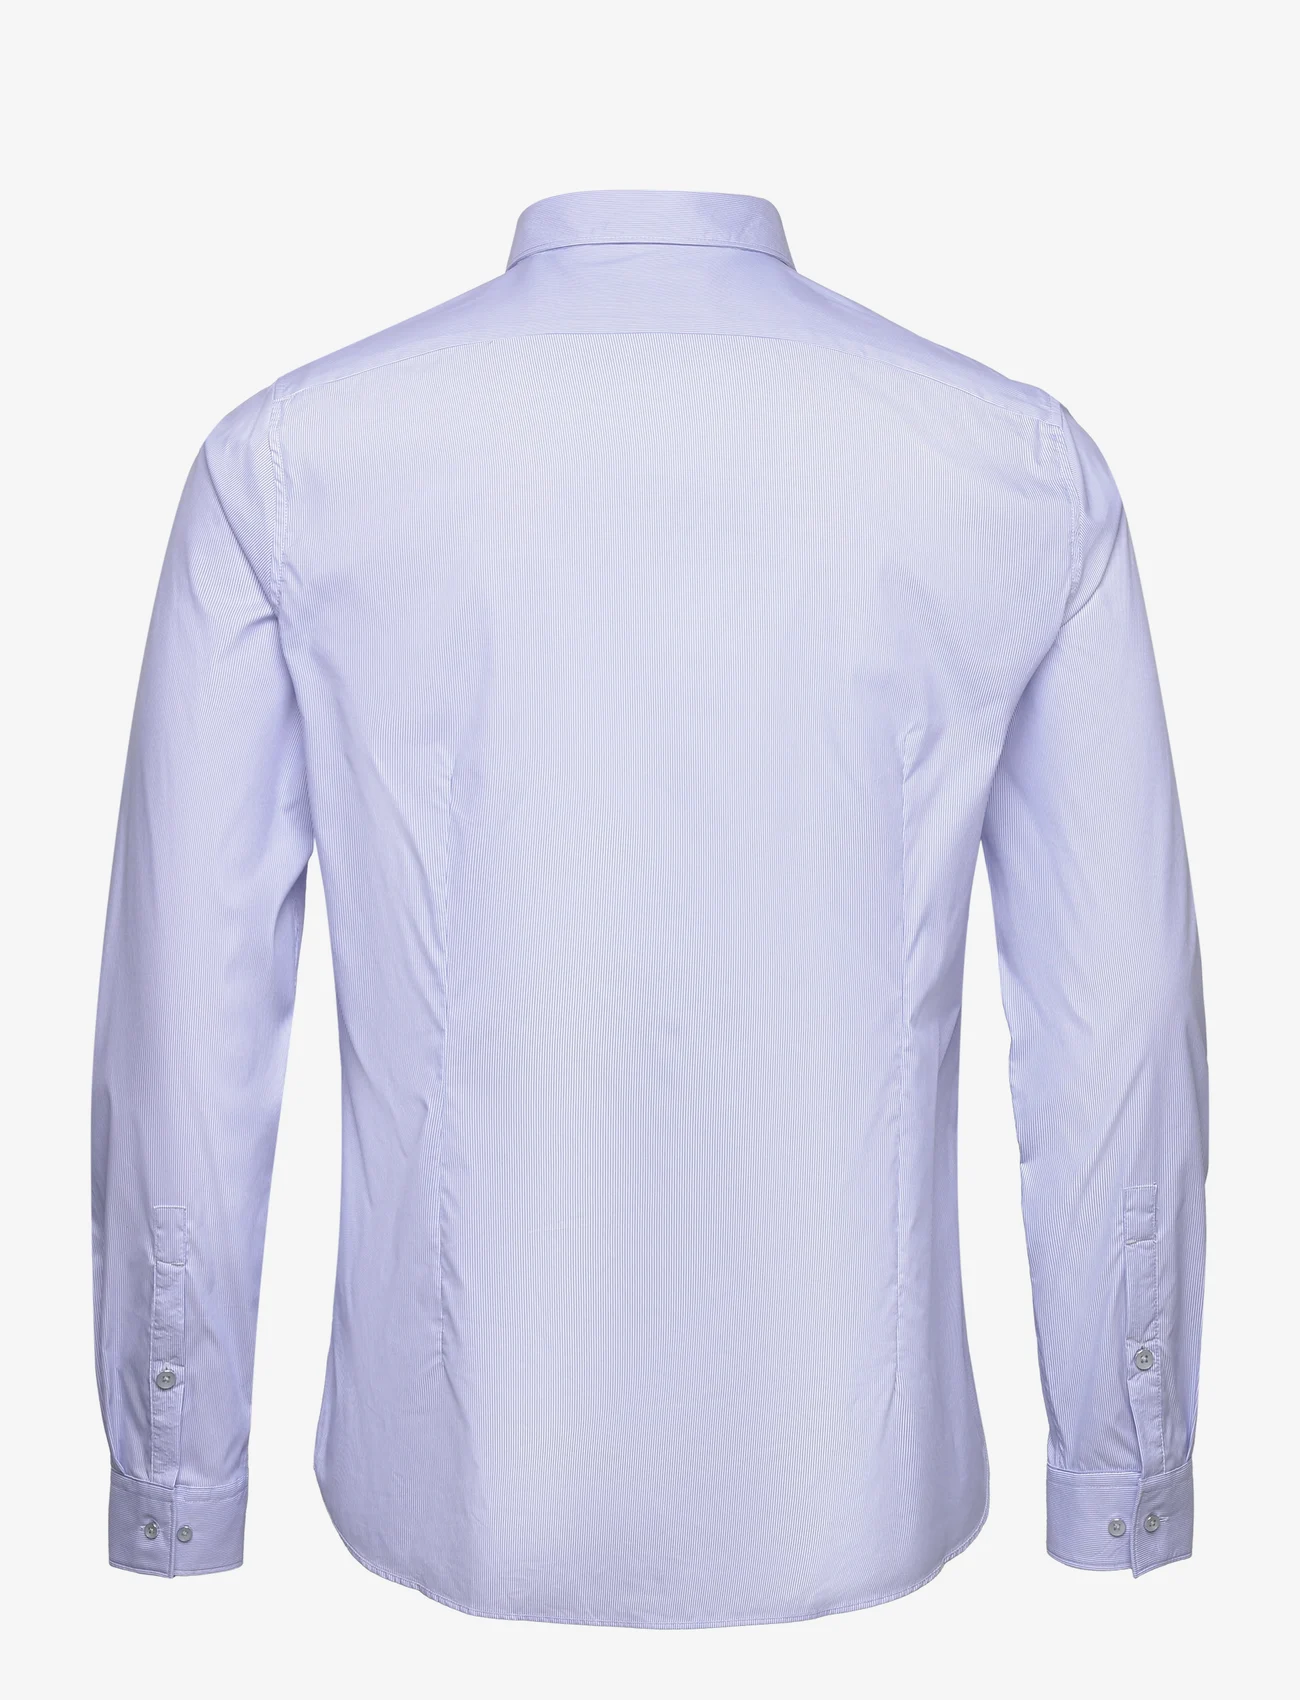 Michael Kors - PERFORMANCE FINE STRIPE SLIM SHIRT - business shirts - light blue - 1